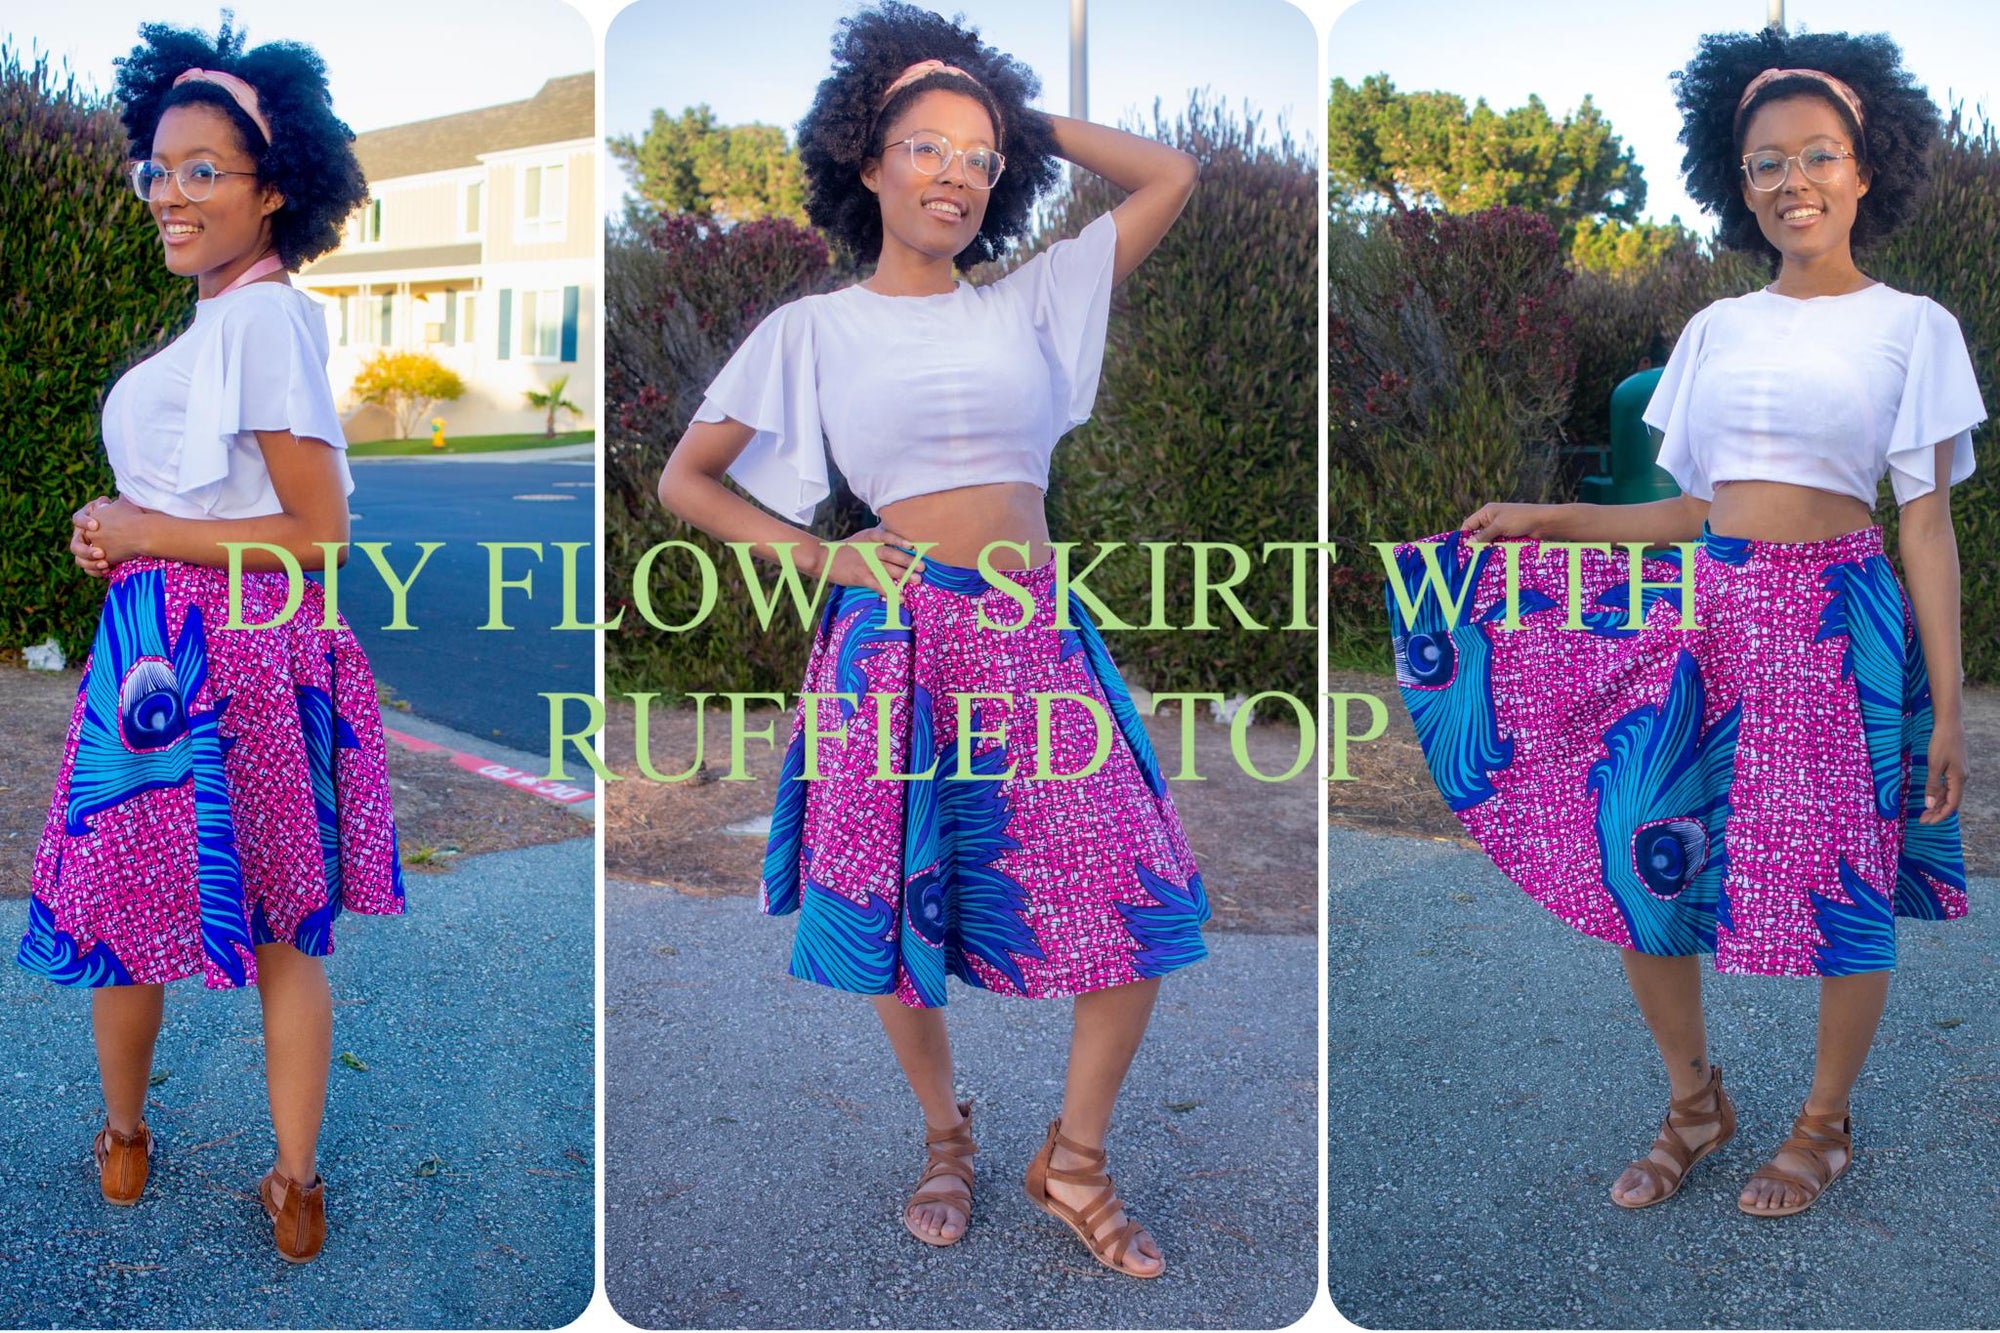 DIY Flowy Skirt with Ruffled Top